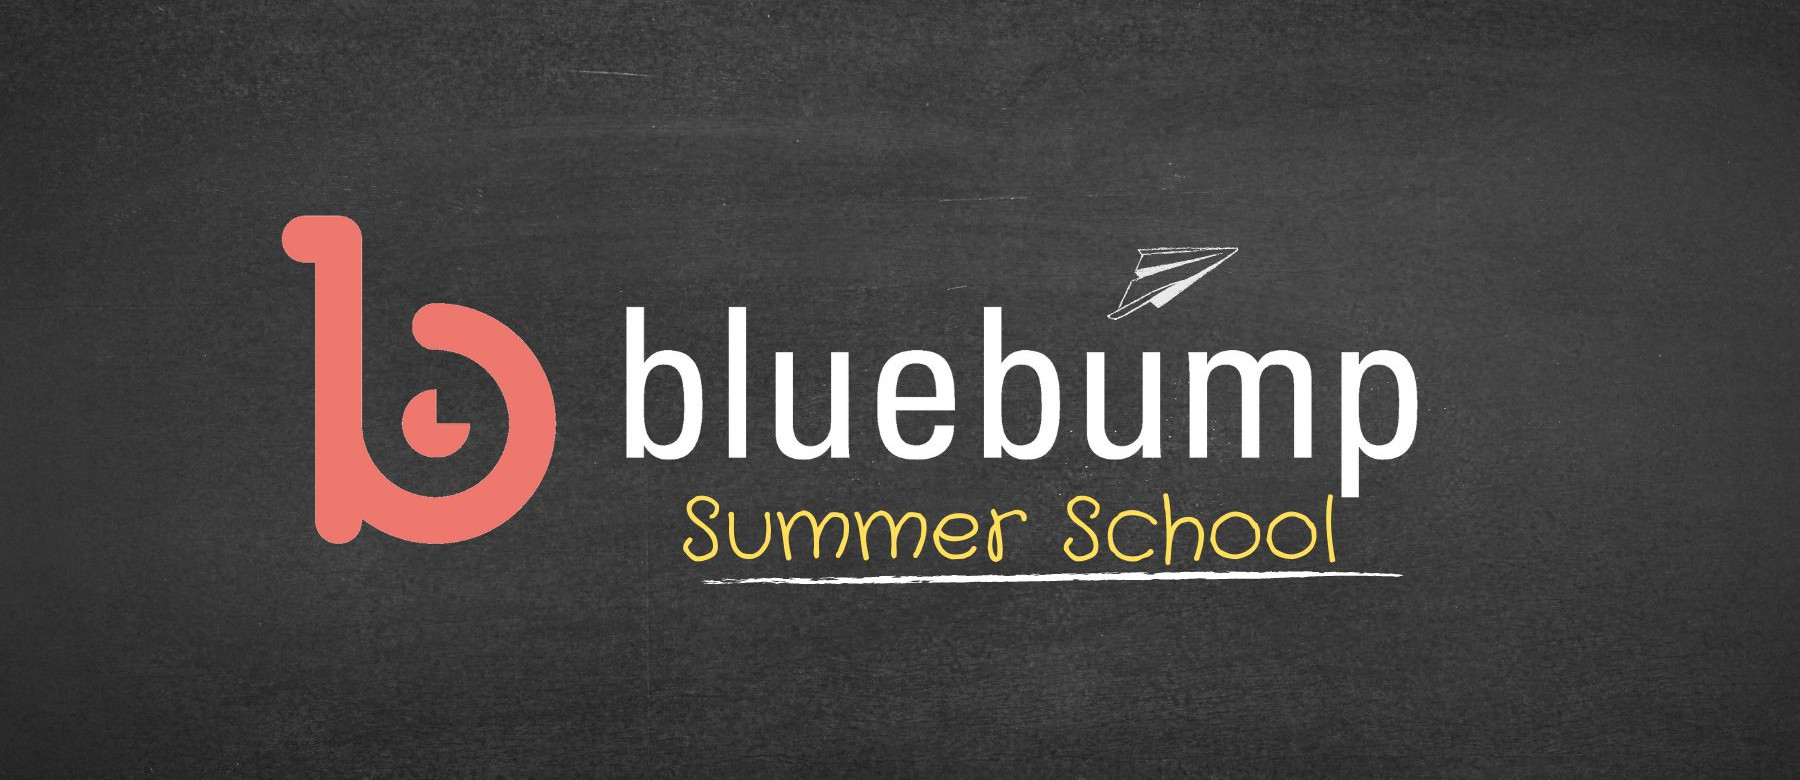 Bluebump Summer School